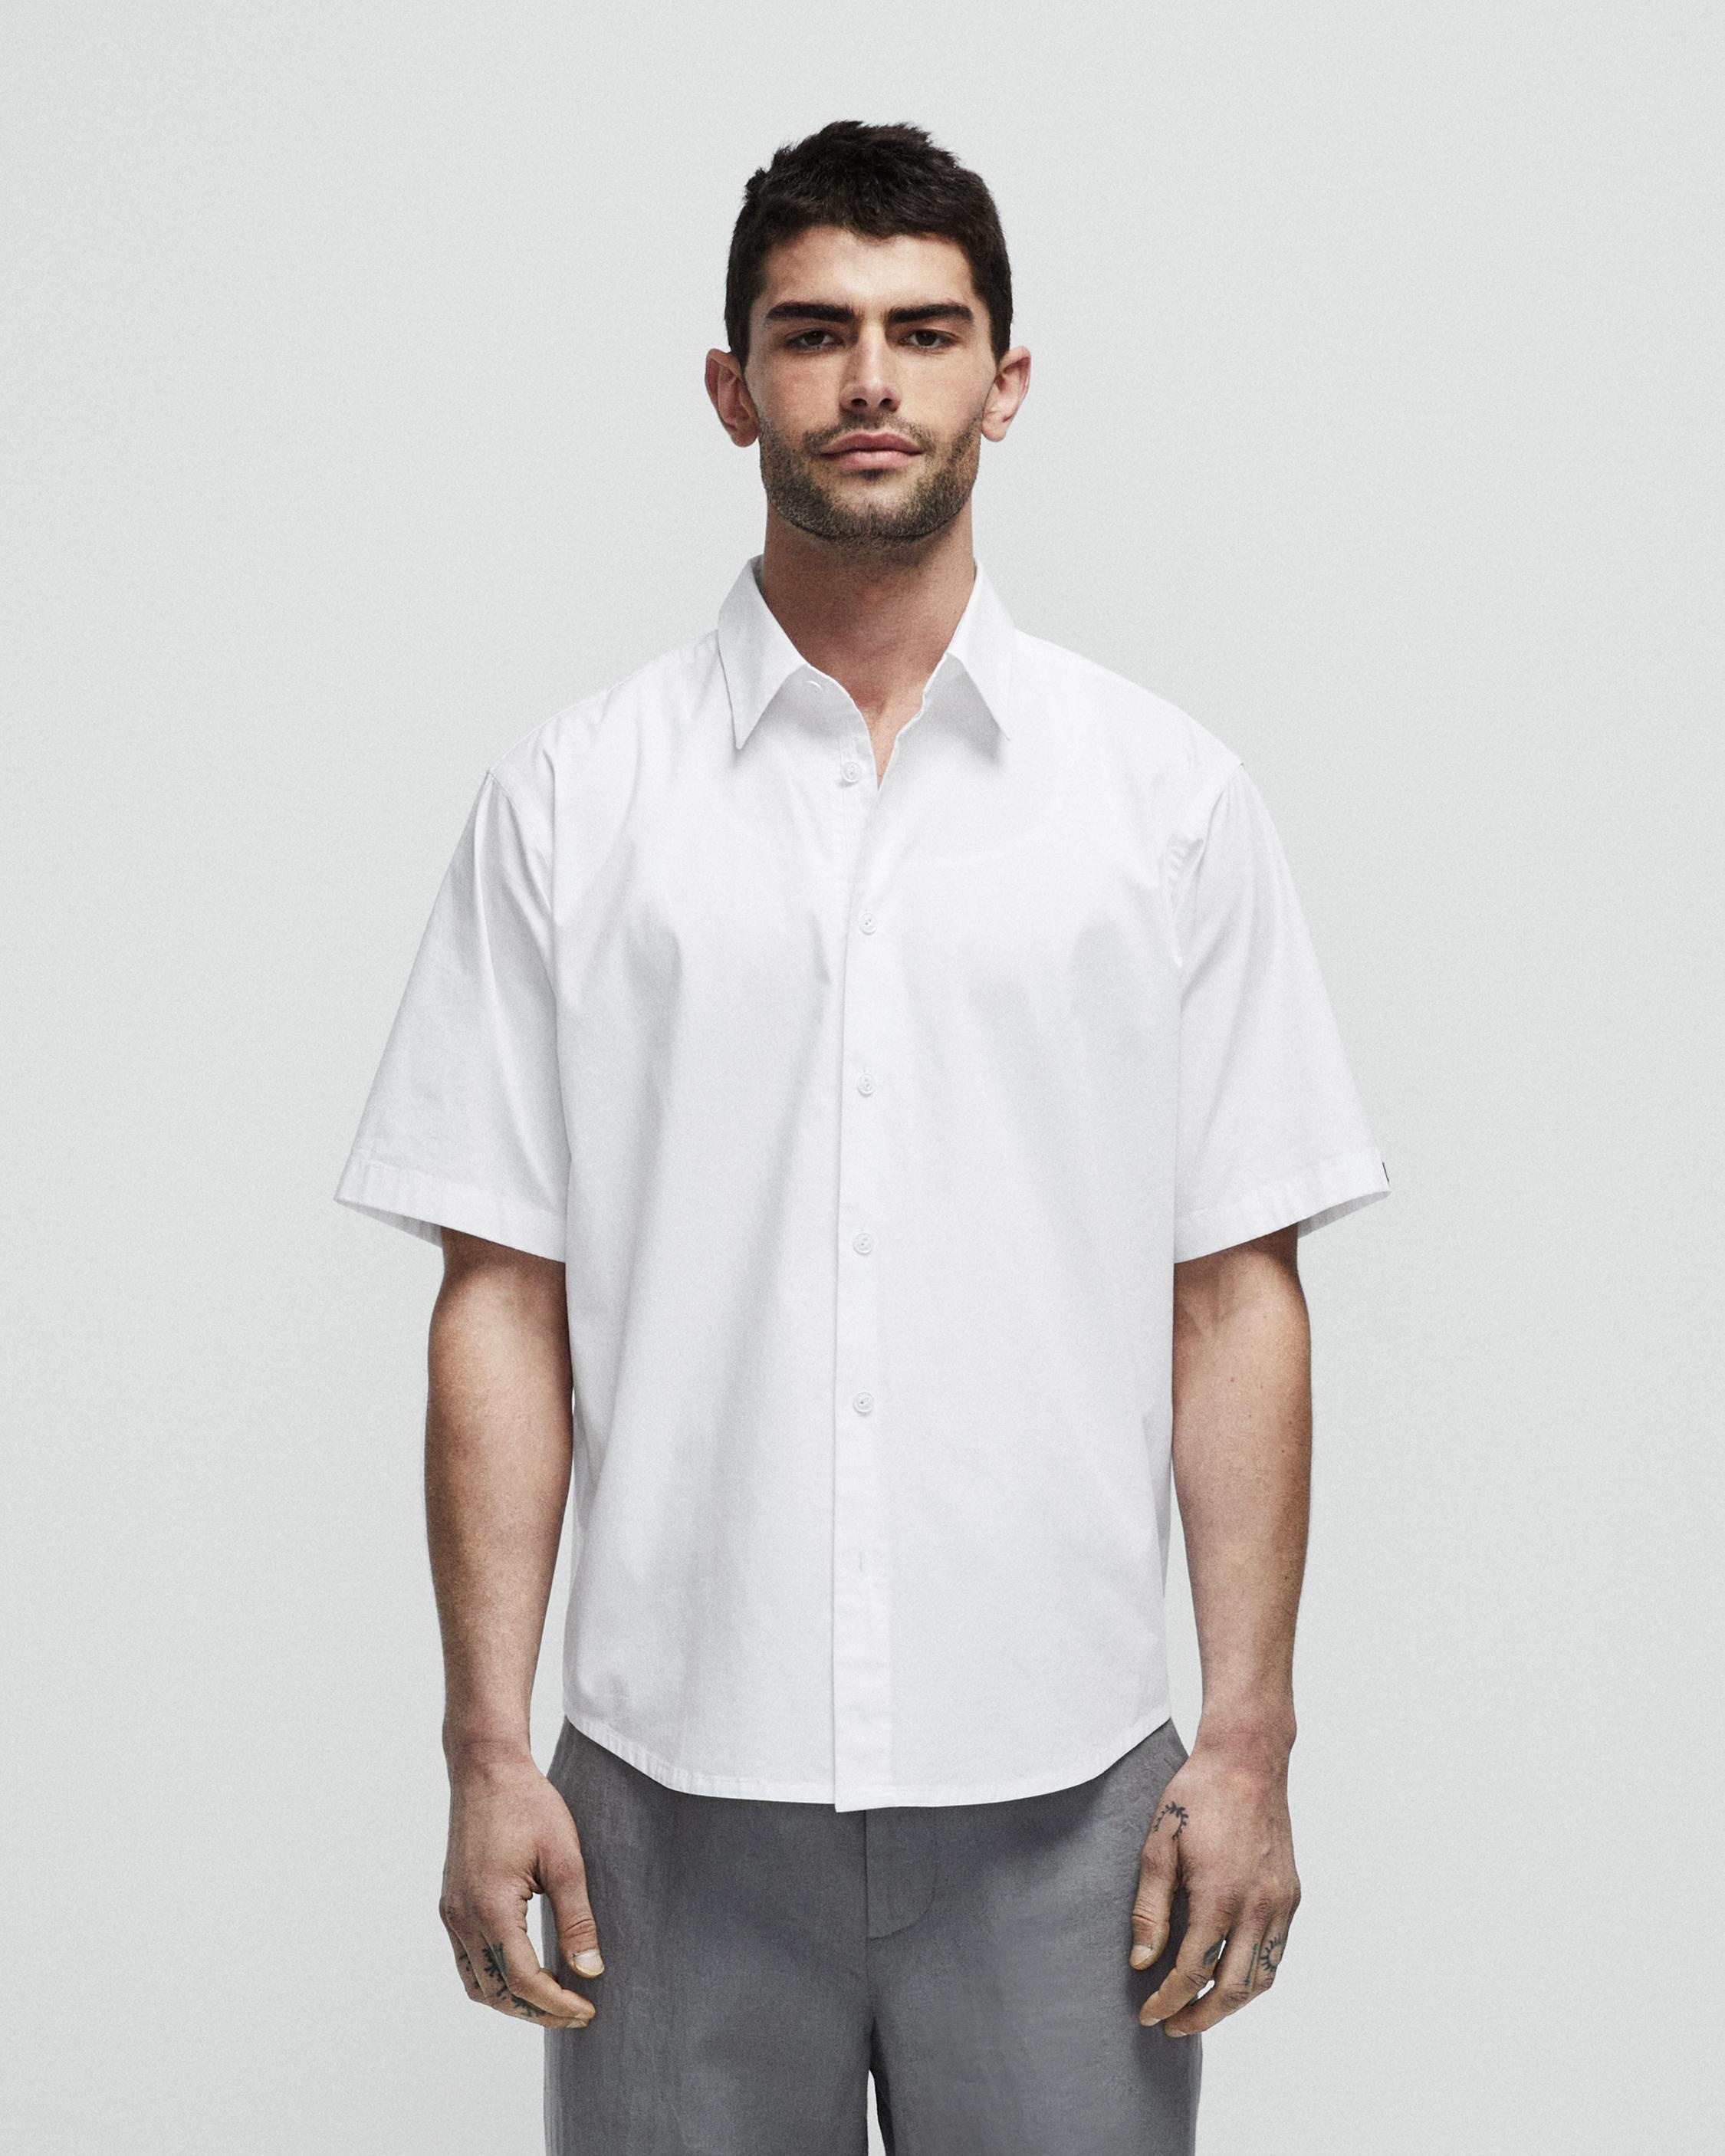 Moore Cotton Poplin Shirt
Relaxed Fit Shirt - 4